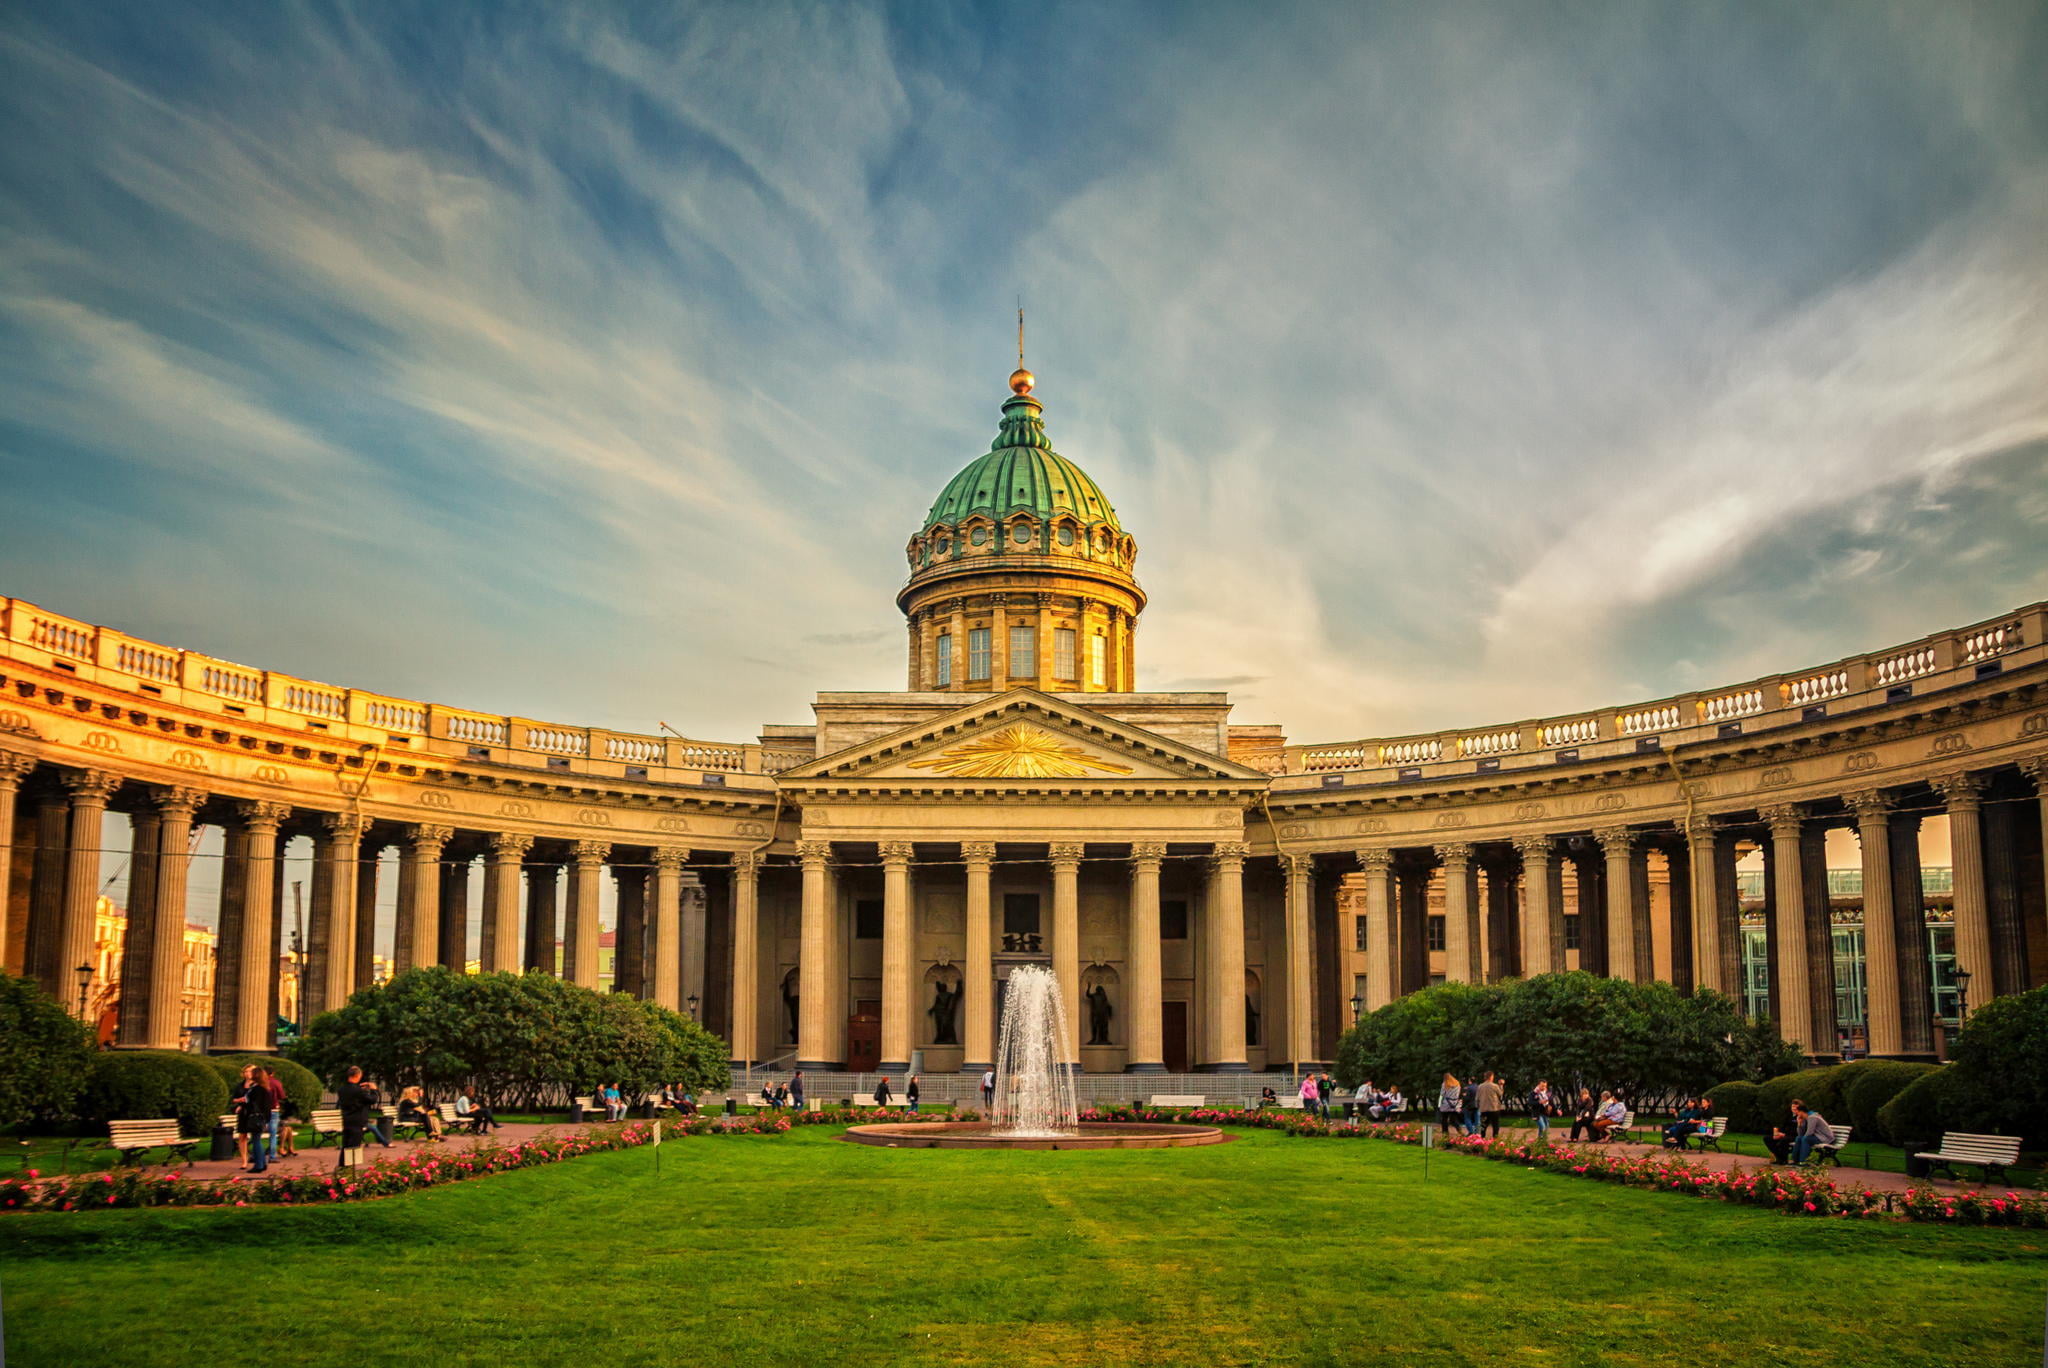 brown and teal building, Peter, Saint Petersburg, Kazan Cathedral